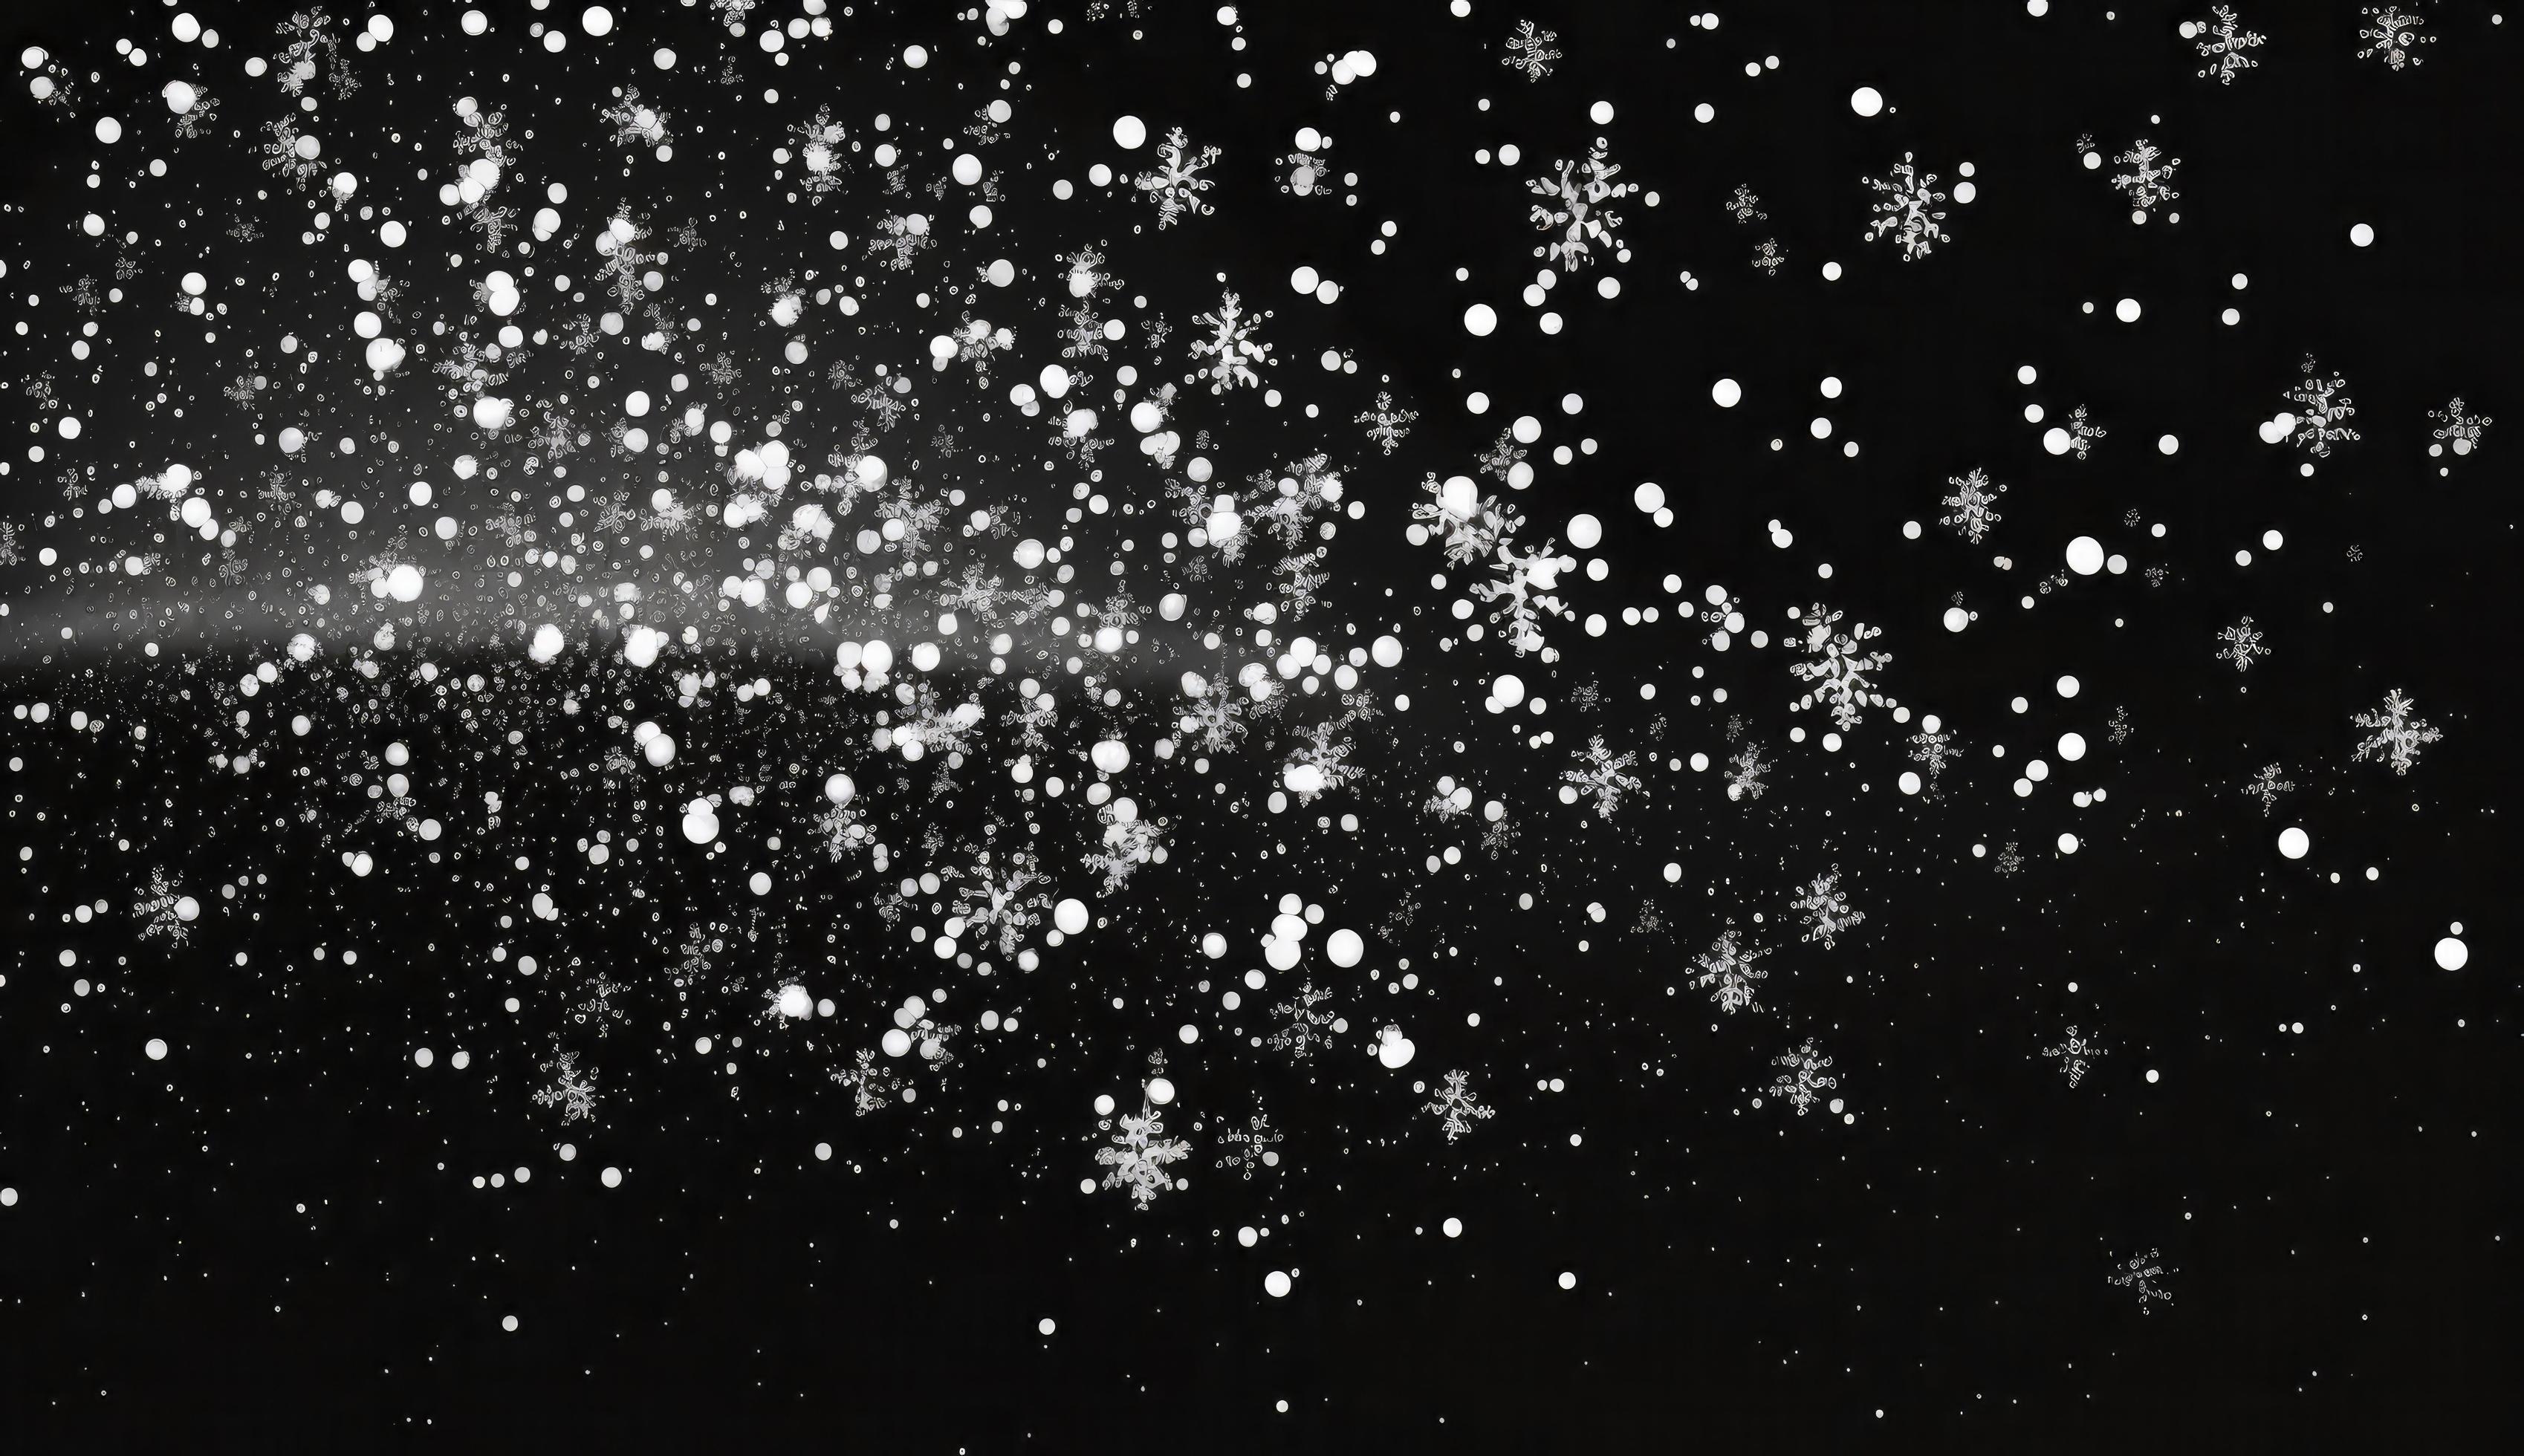 Snowflakes falling down on black background, heavy snow flakes